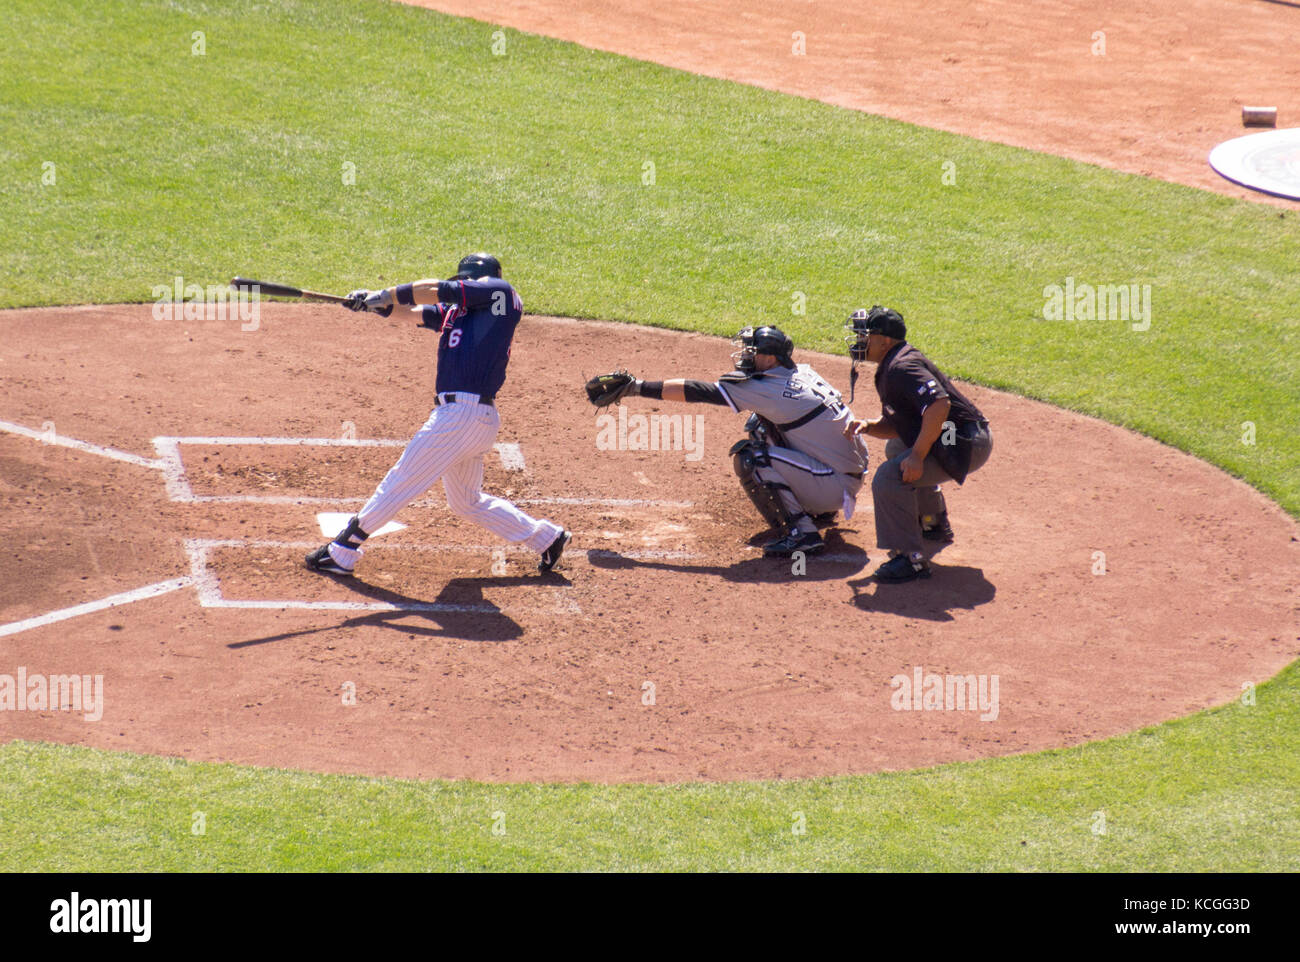 MINNEAPOLIS, MINNESOTA/UNITED STATES - September 15, 2012: Josh Willingham batting during a Minnesota Twins game on September 15th, 2012. Stock Photo